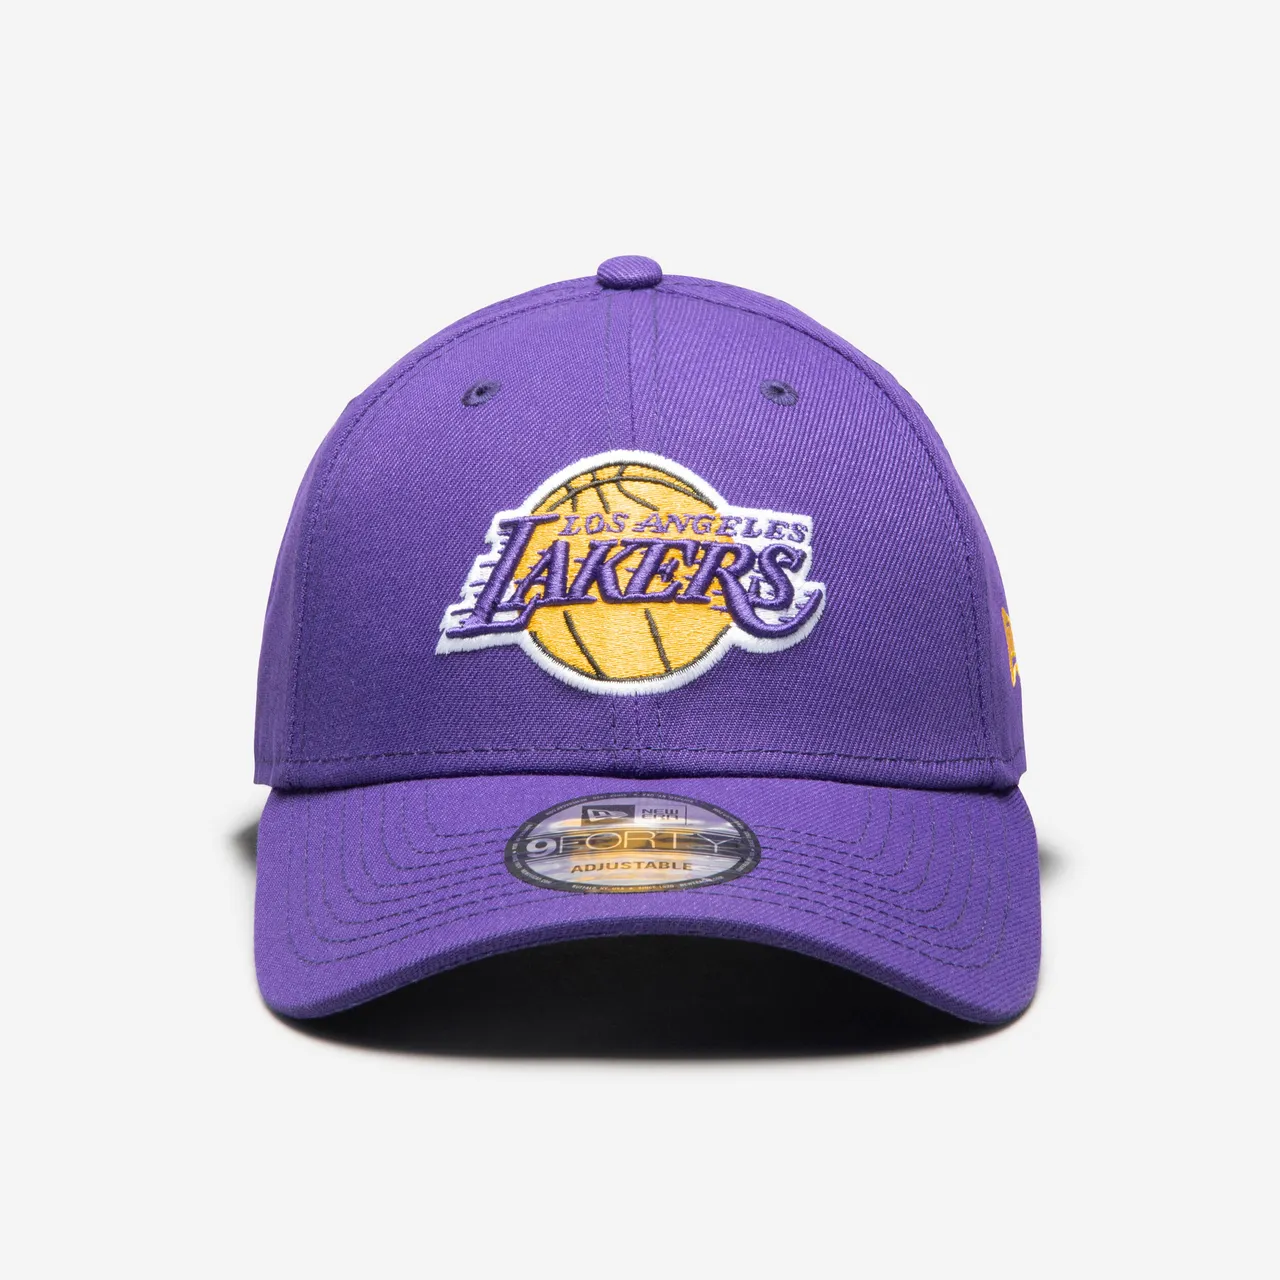 Men's/women's Basketball Cap Nba - Los Angeles Lakers/purple